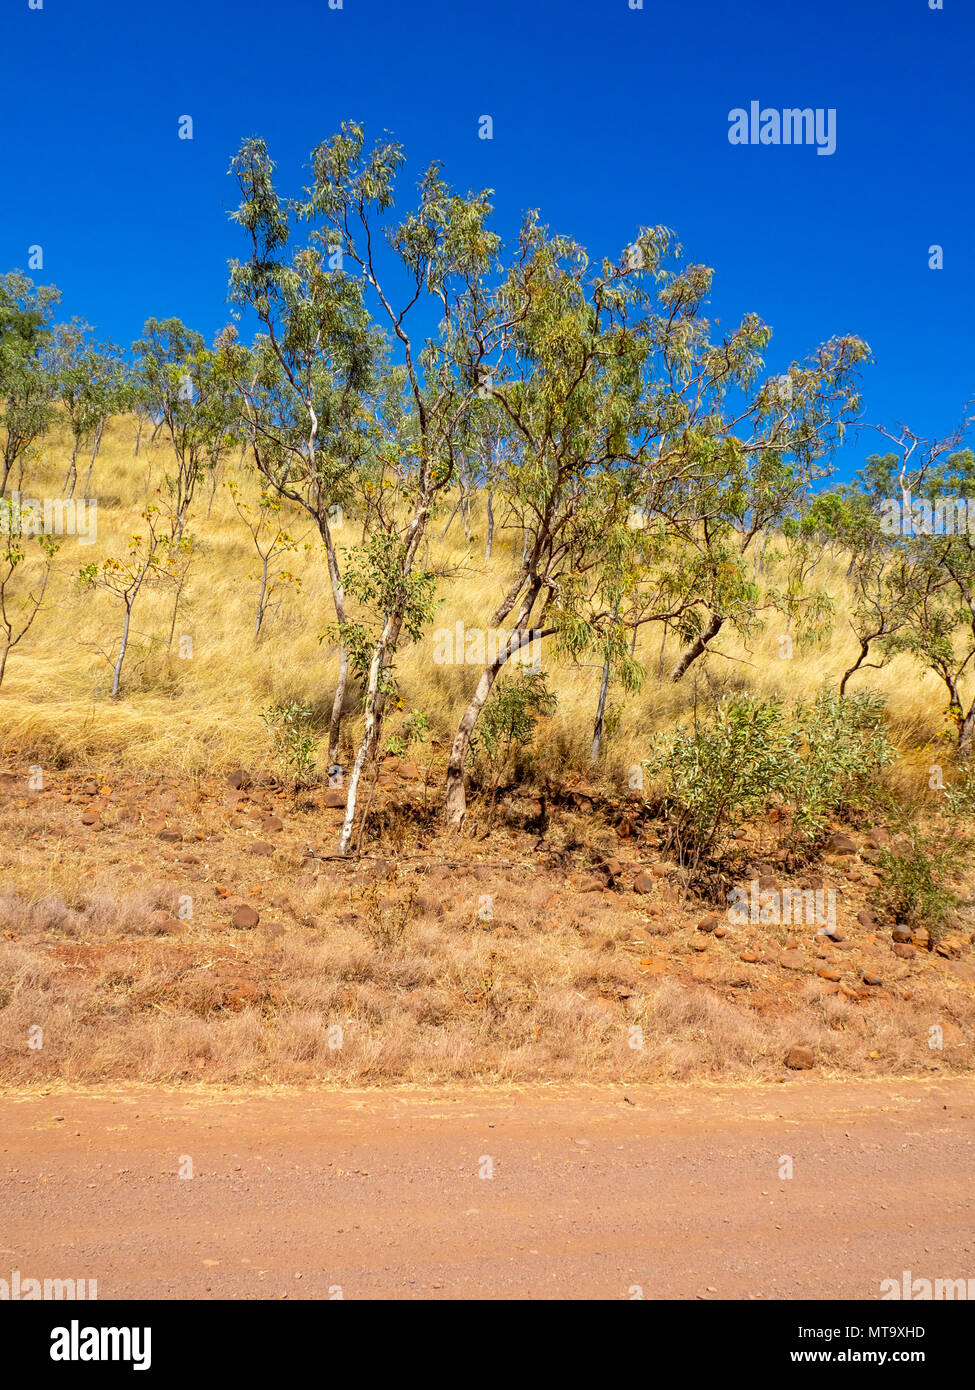 Banding of blue sky, green eucalyptus trees, dry yellow grass and red pindan dirt road of Gibb River Road, Kimberley, WA, Australia. Stock Photo